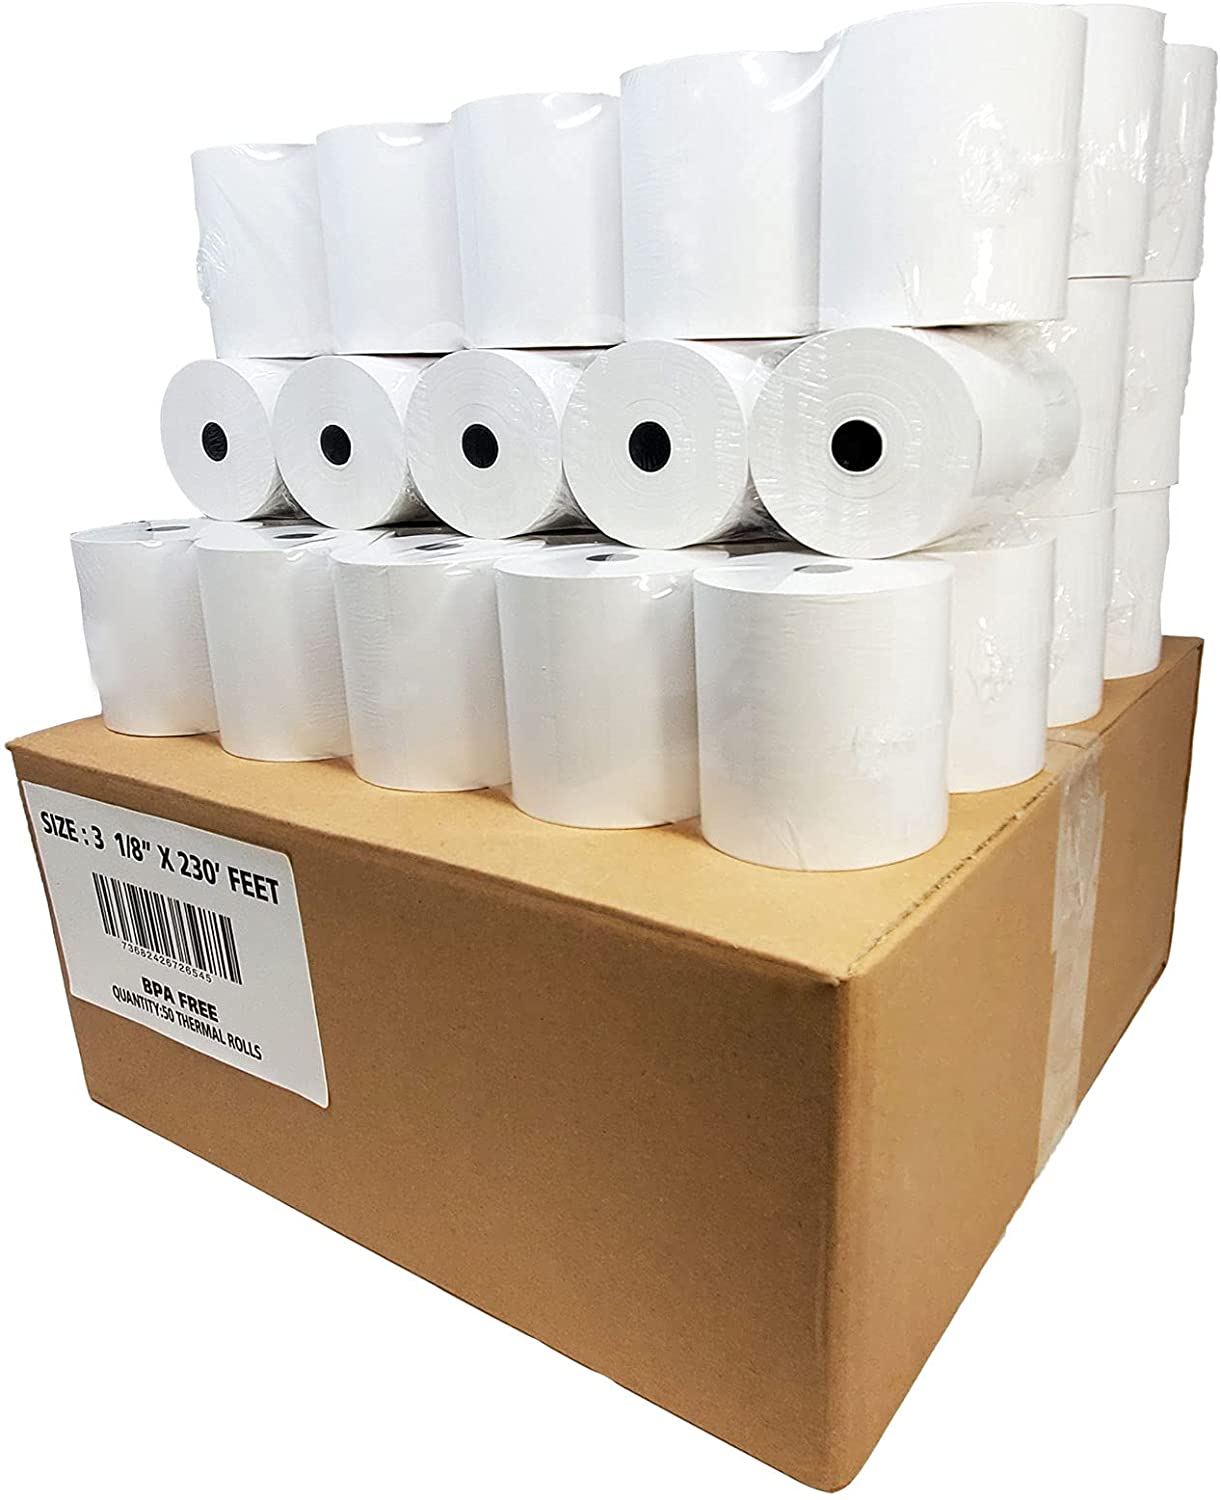 Thermal Receipt Paper Size: 3 1/8″ x 230′ (50 Rolls)